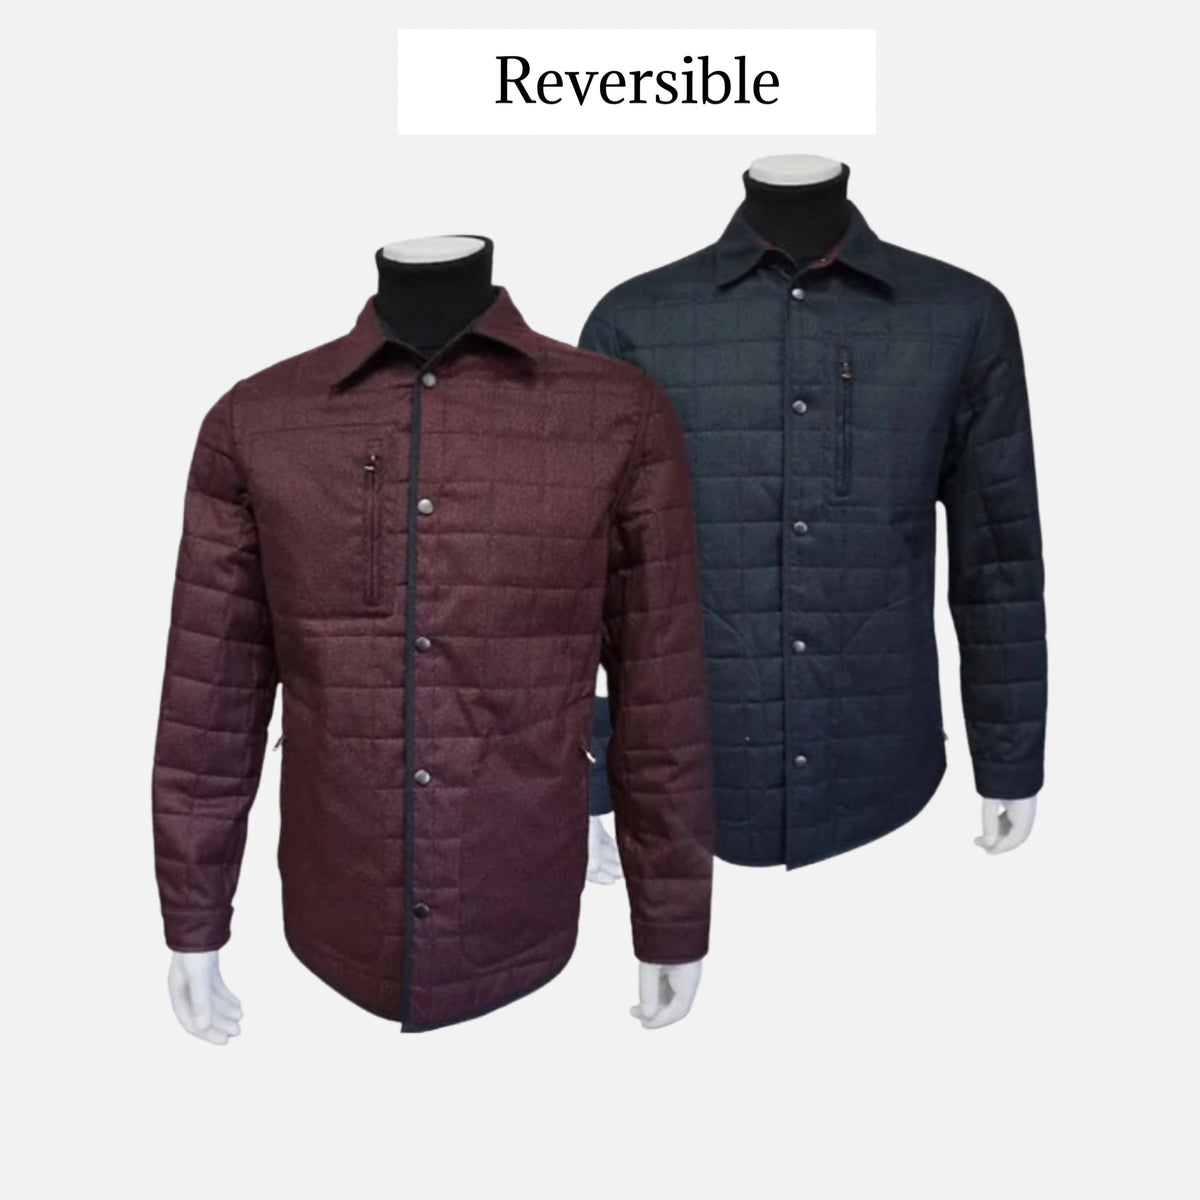 Enzo Reversible Shirt Jacket